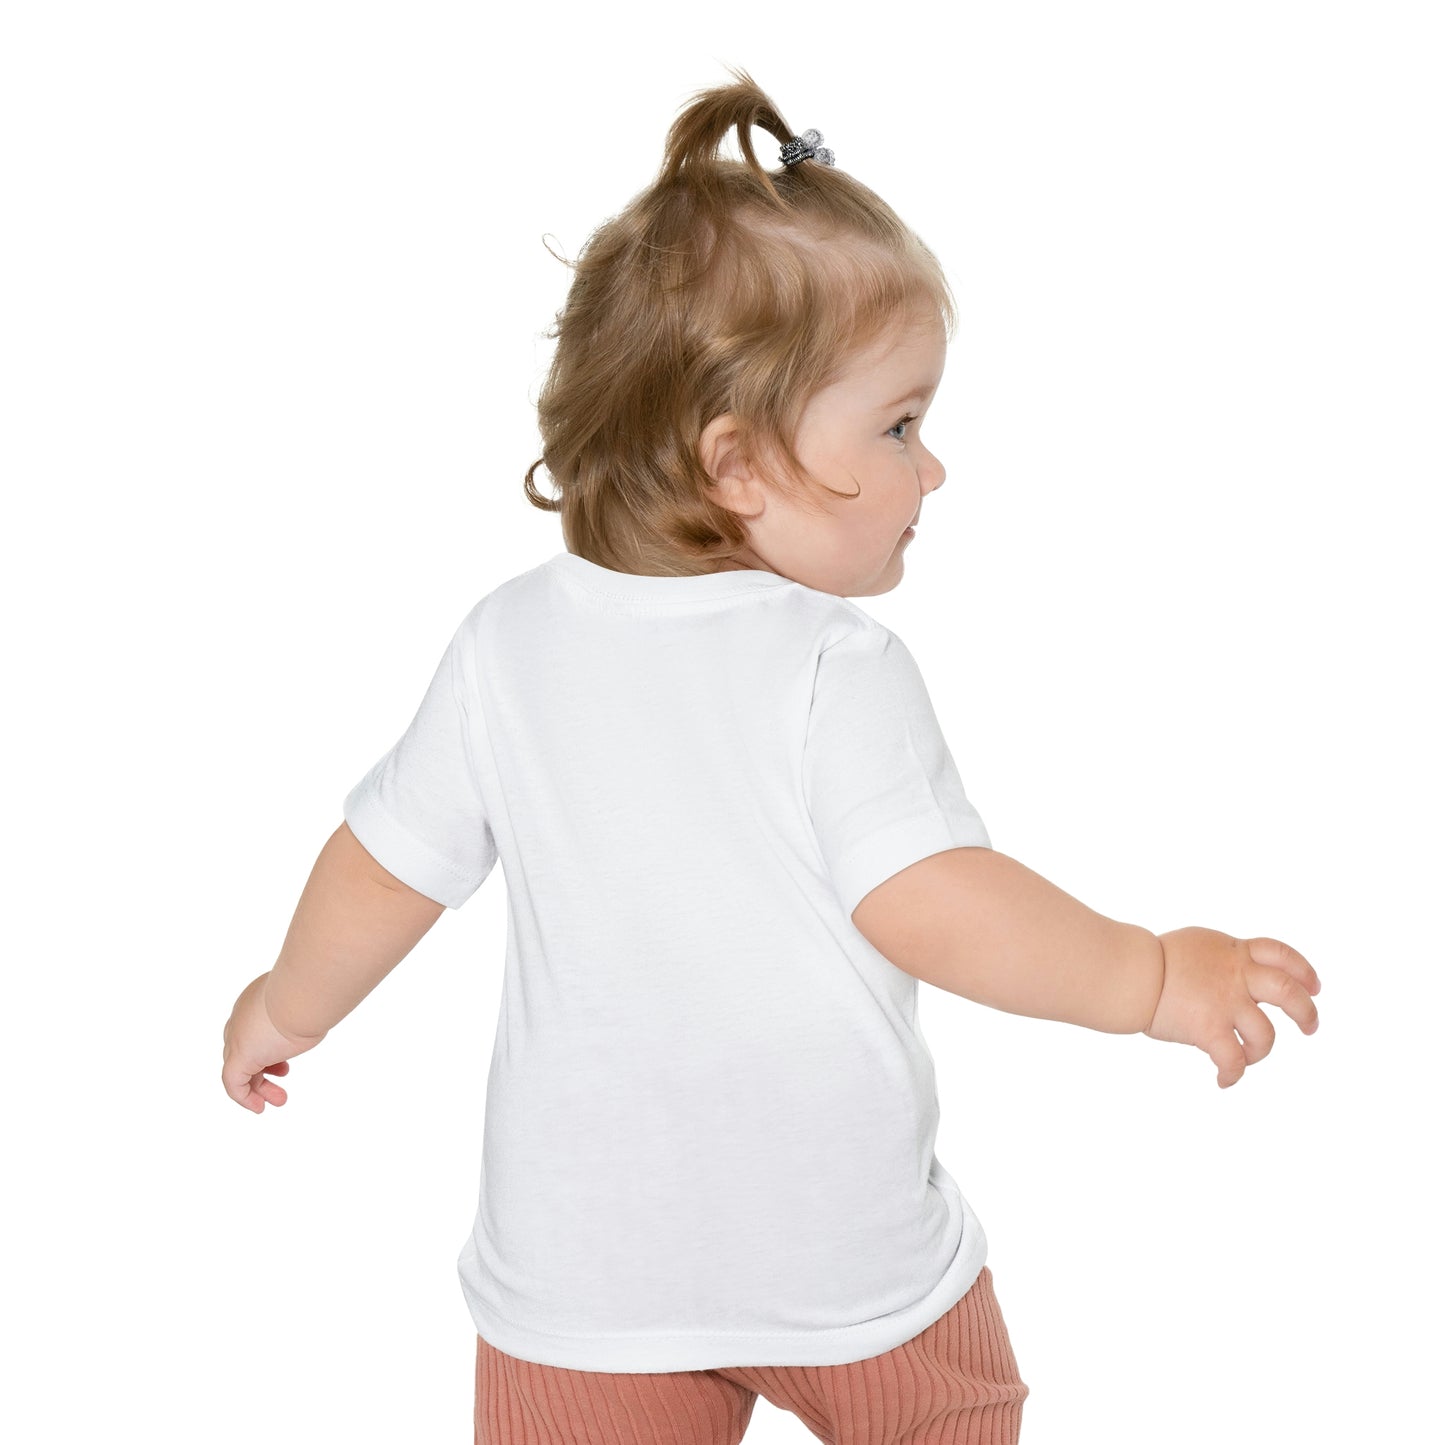 Cute but Moo-dy Baby Short Sleeve T-Shirt